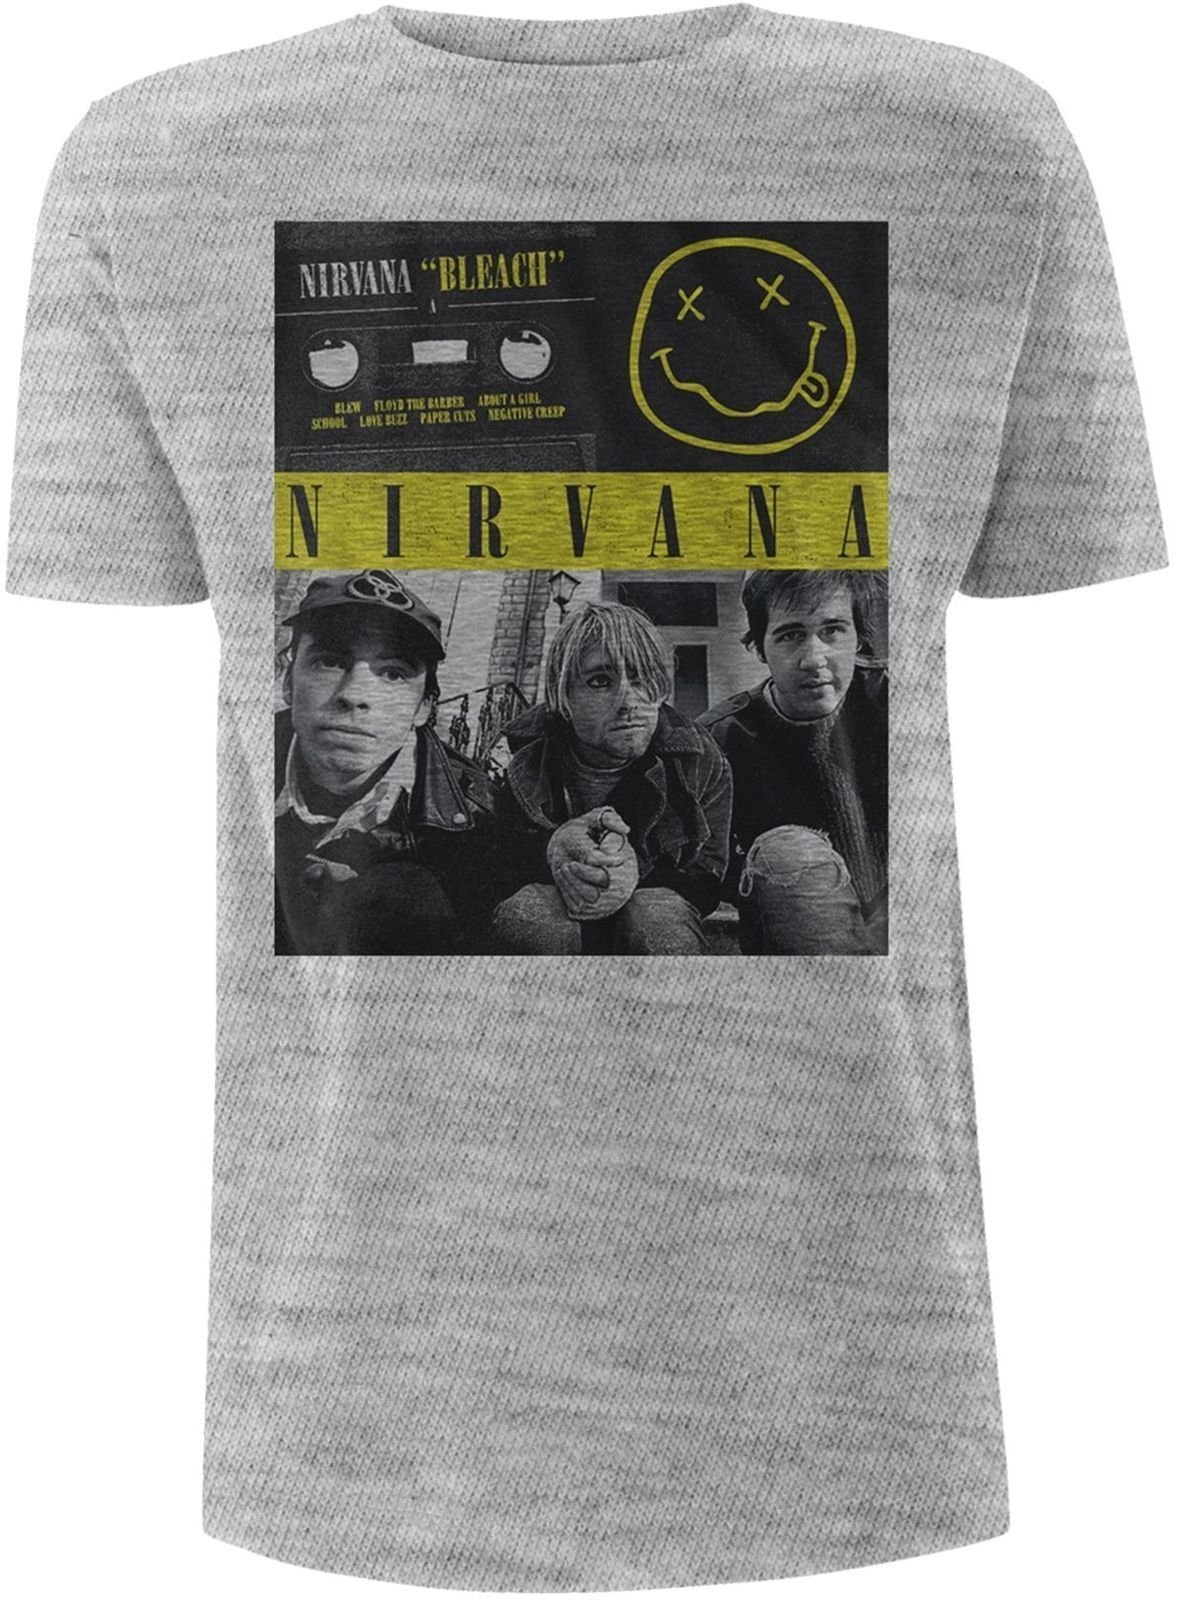 T-shirt Nirvana T-shirt Bleach Tape Masculino Grey L